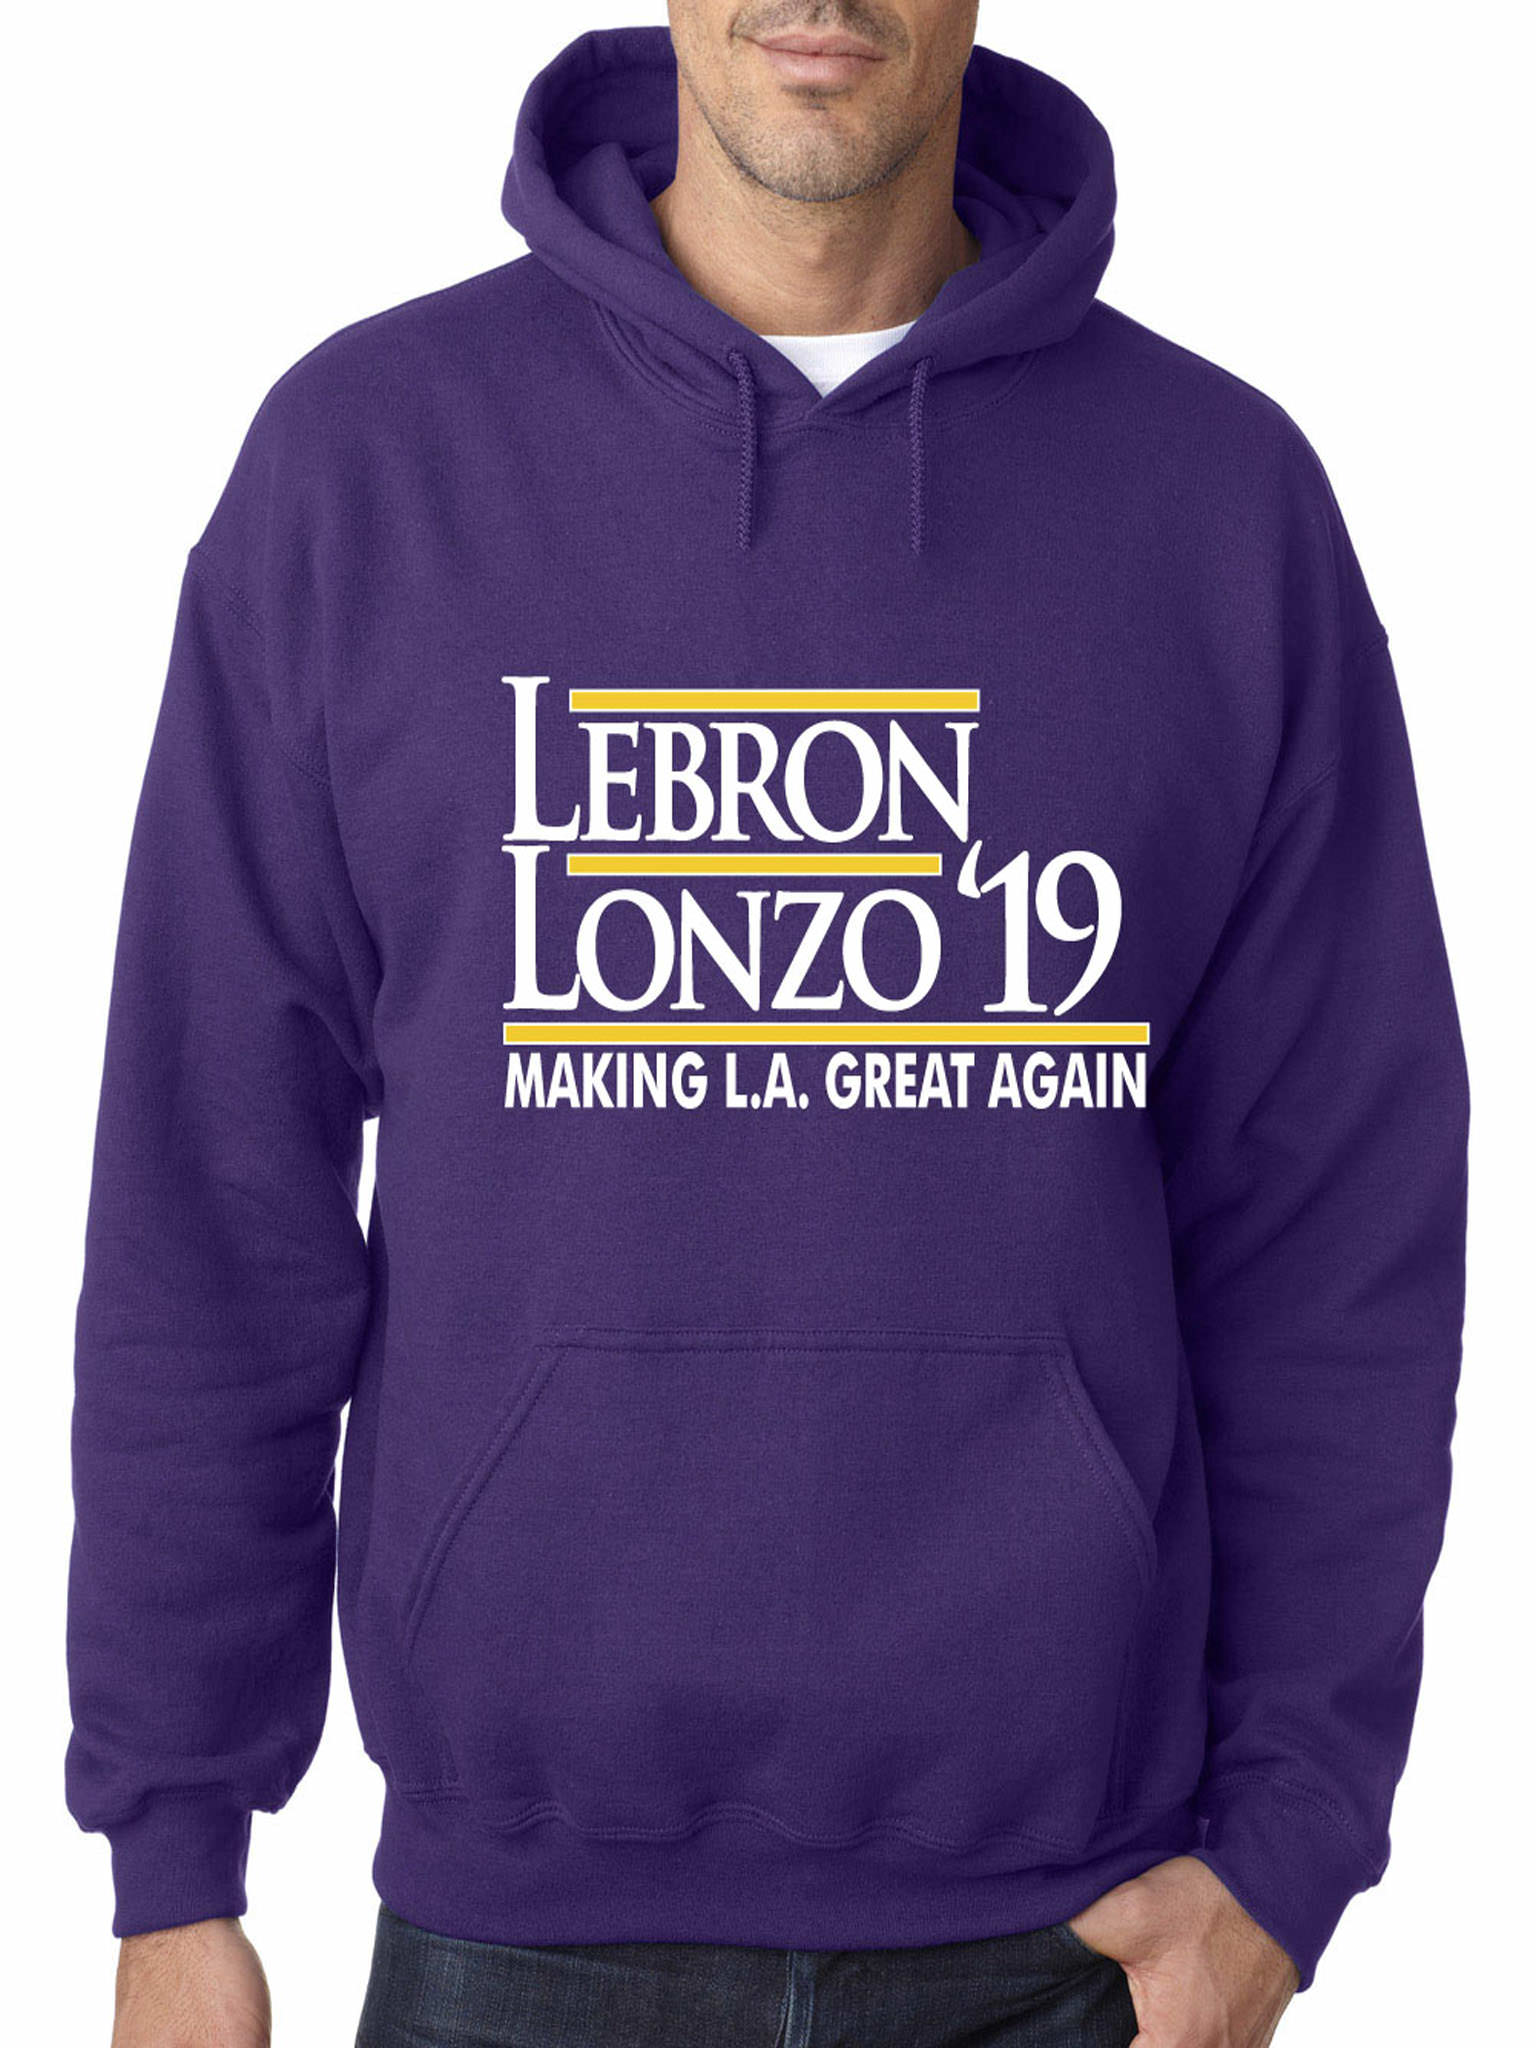 PURPLE Los Angeles Lebron James "Lebron Lonzo 19" Hooded Sweatshirt ADULT - image 1 of 1